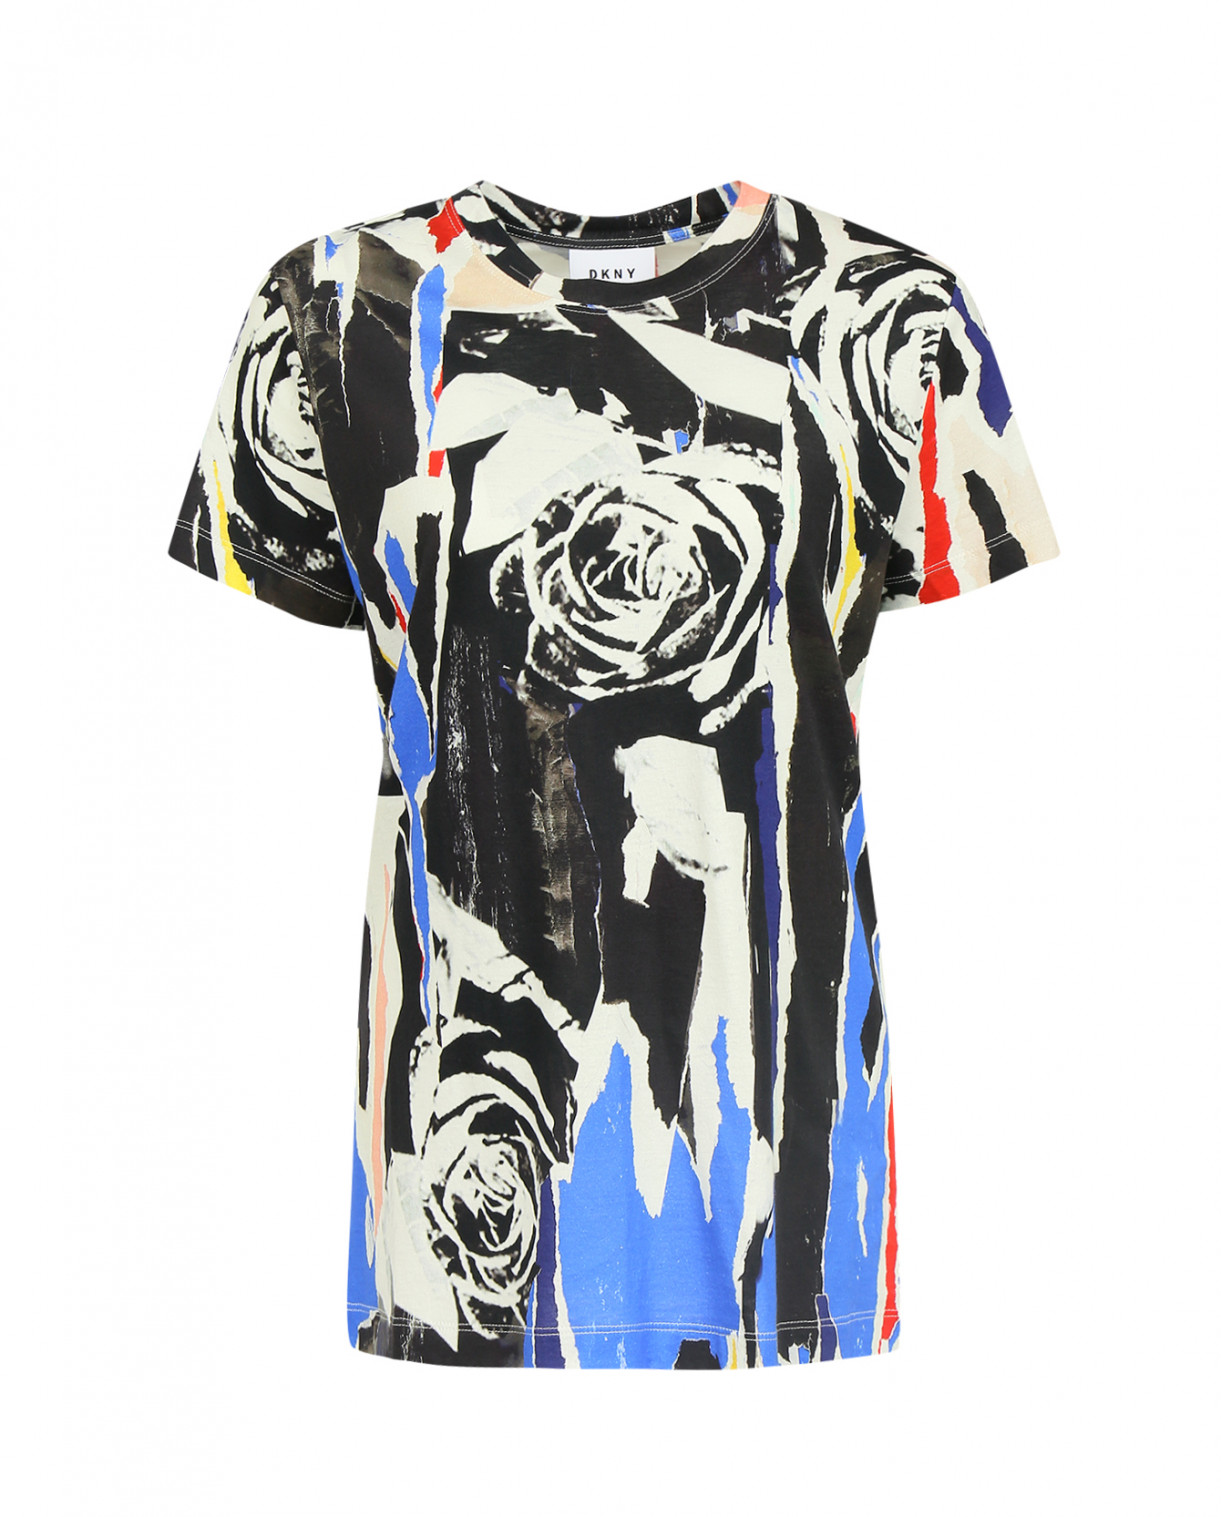 Хлопковая футболка DKNY  –  Общий вид  – Цвет:  Мультиколор